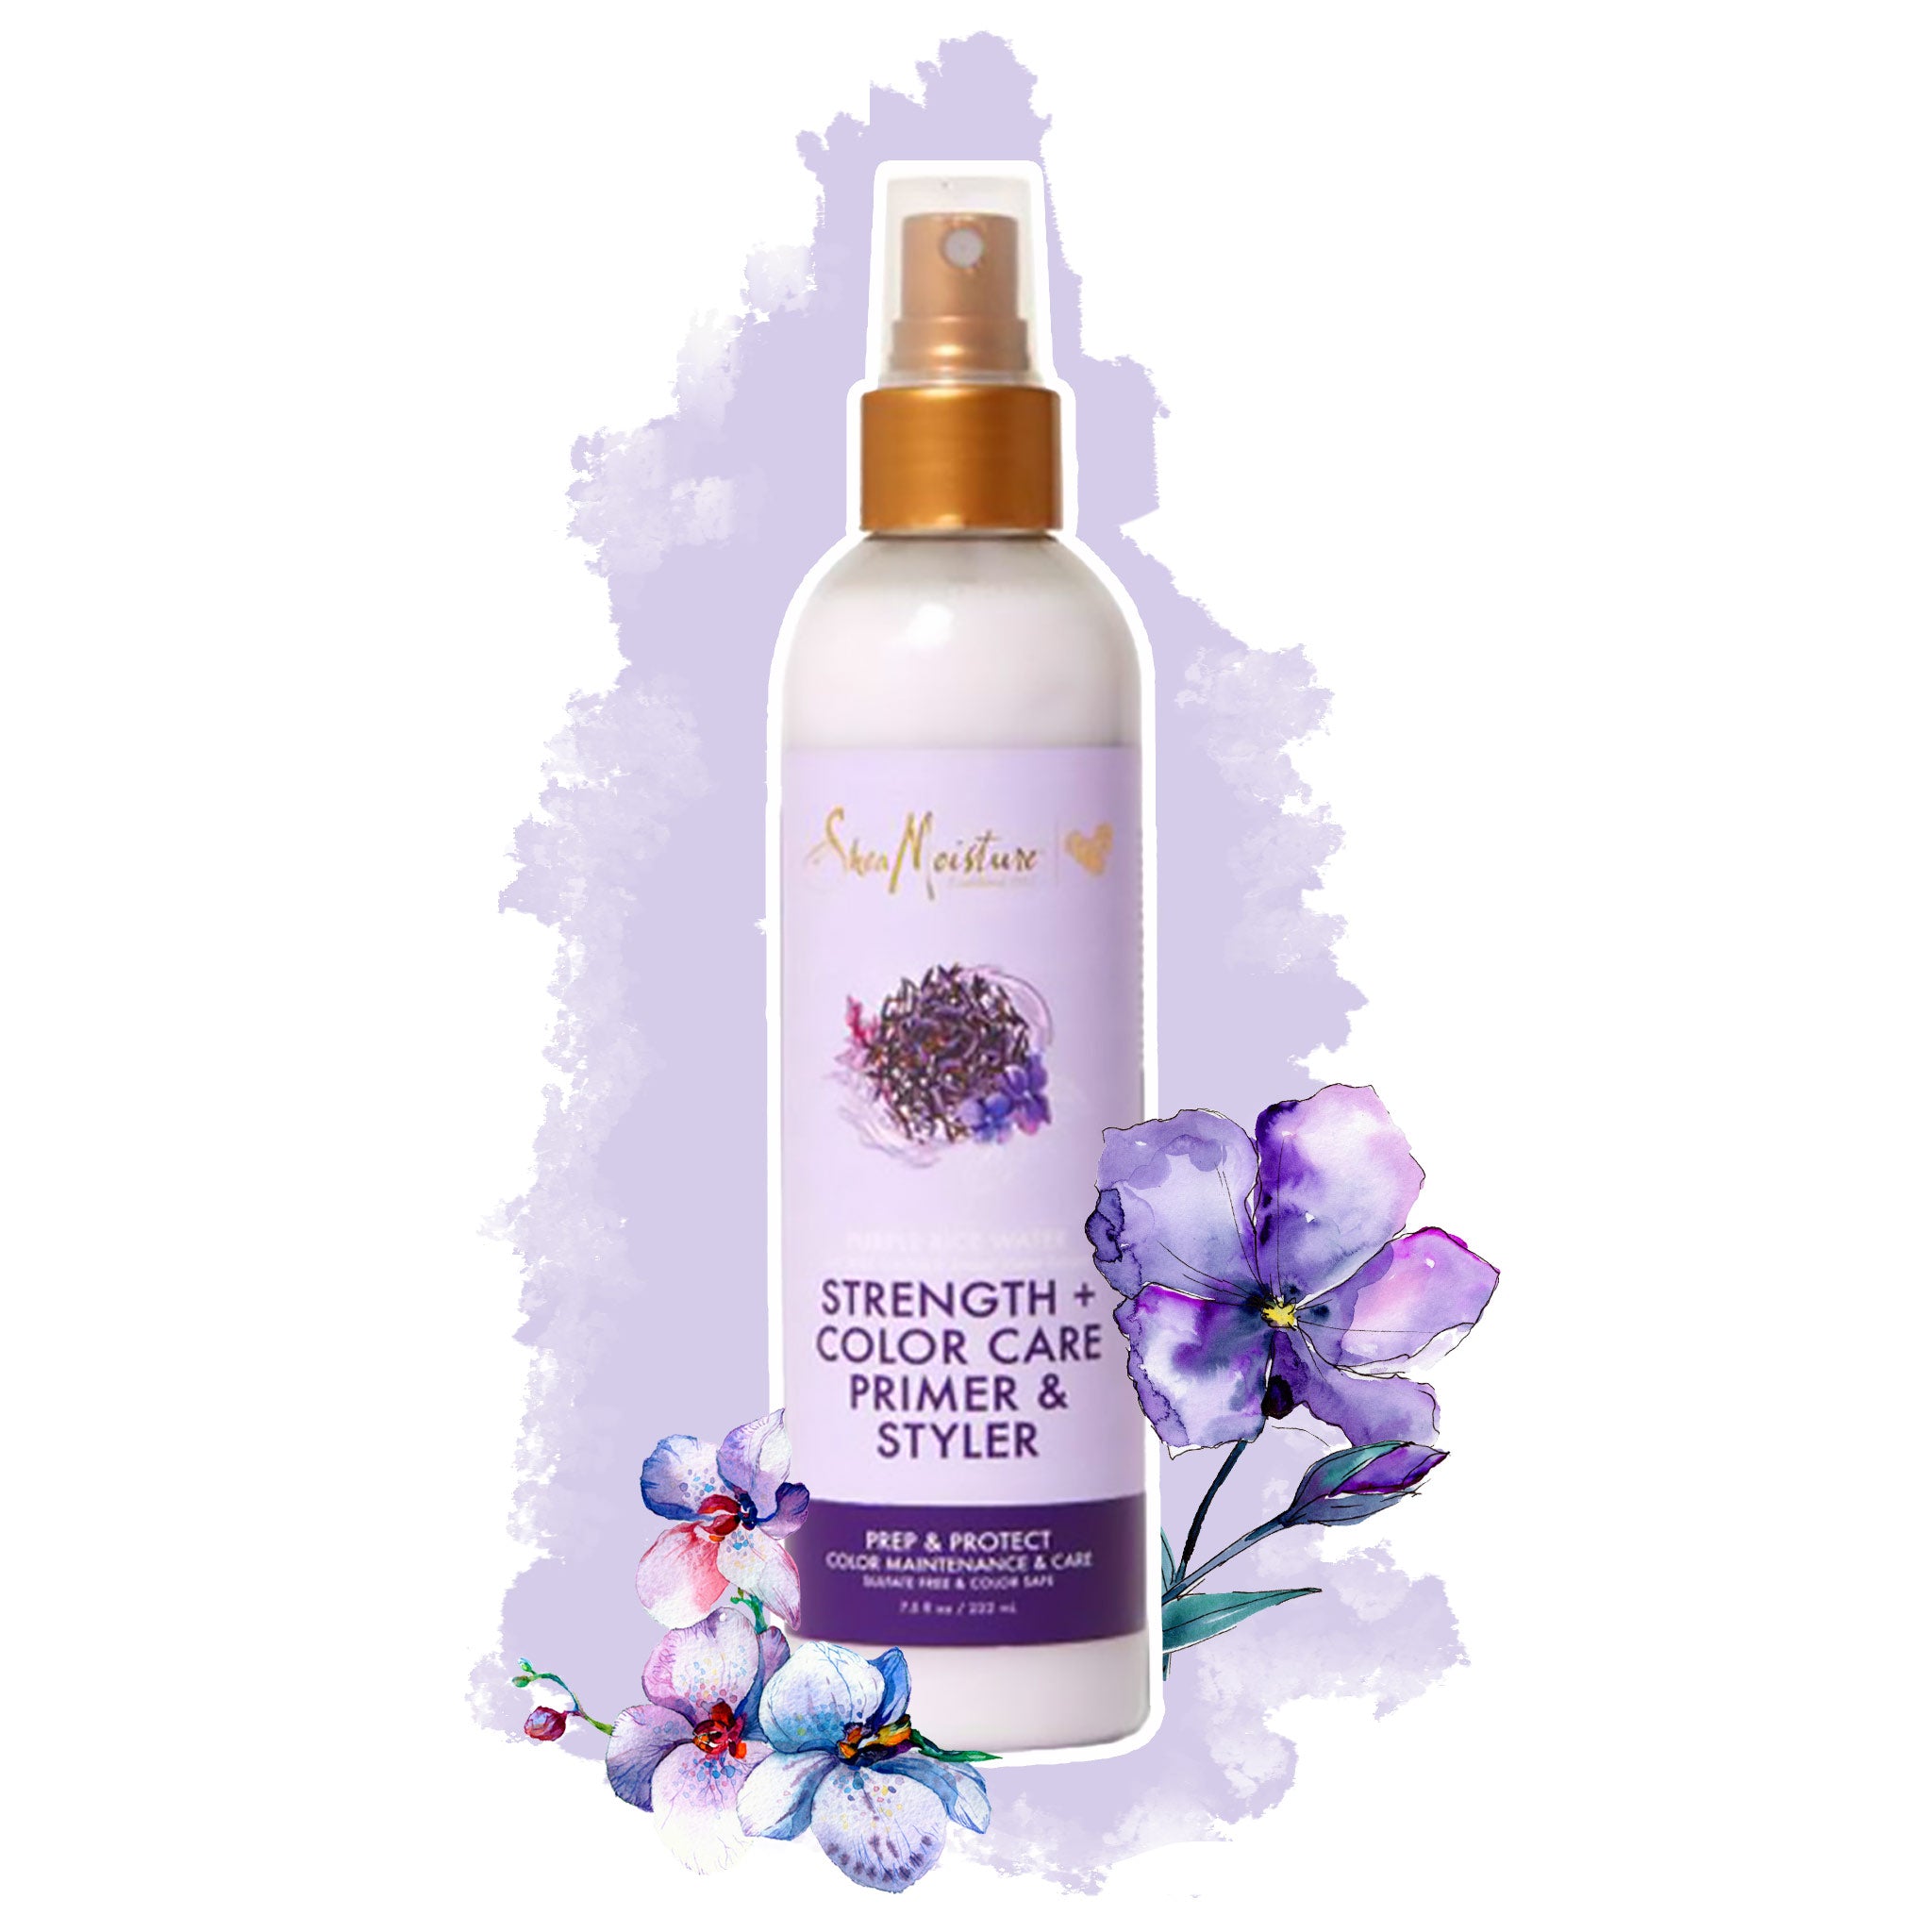 lockenkopf-Shea-Moisture-purple-rice-water-wild-orchid-sweet-violet-extract-strength-color-care-primer-styler.jpg